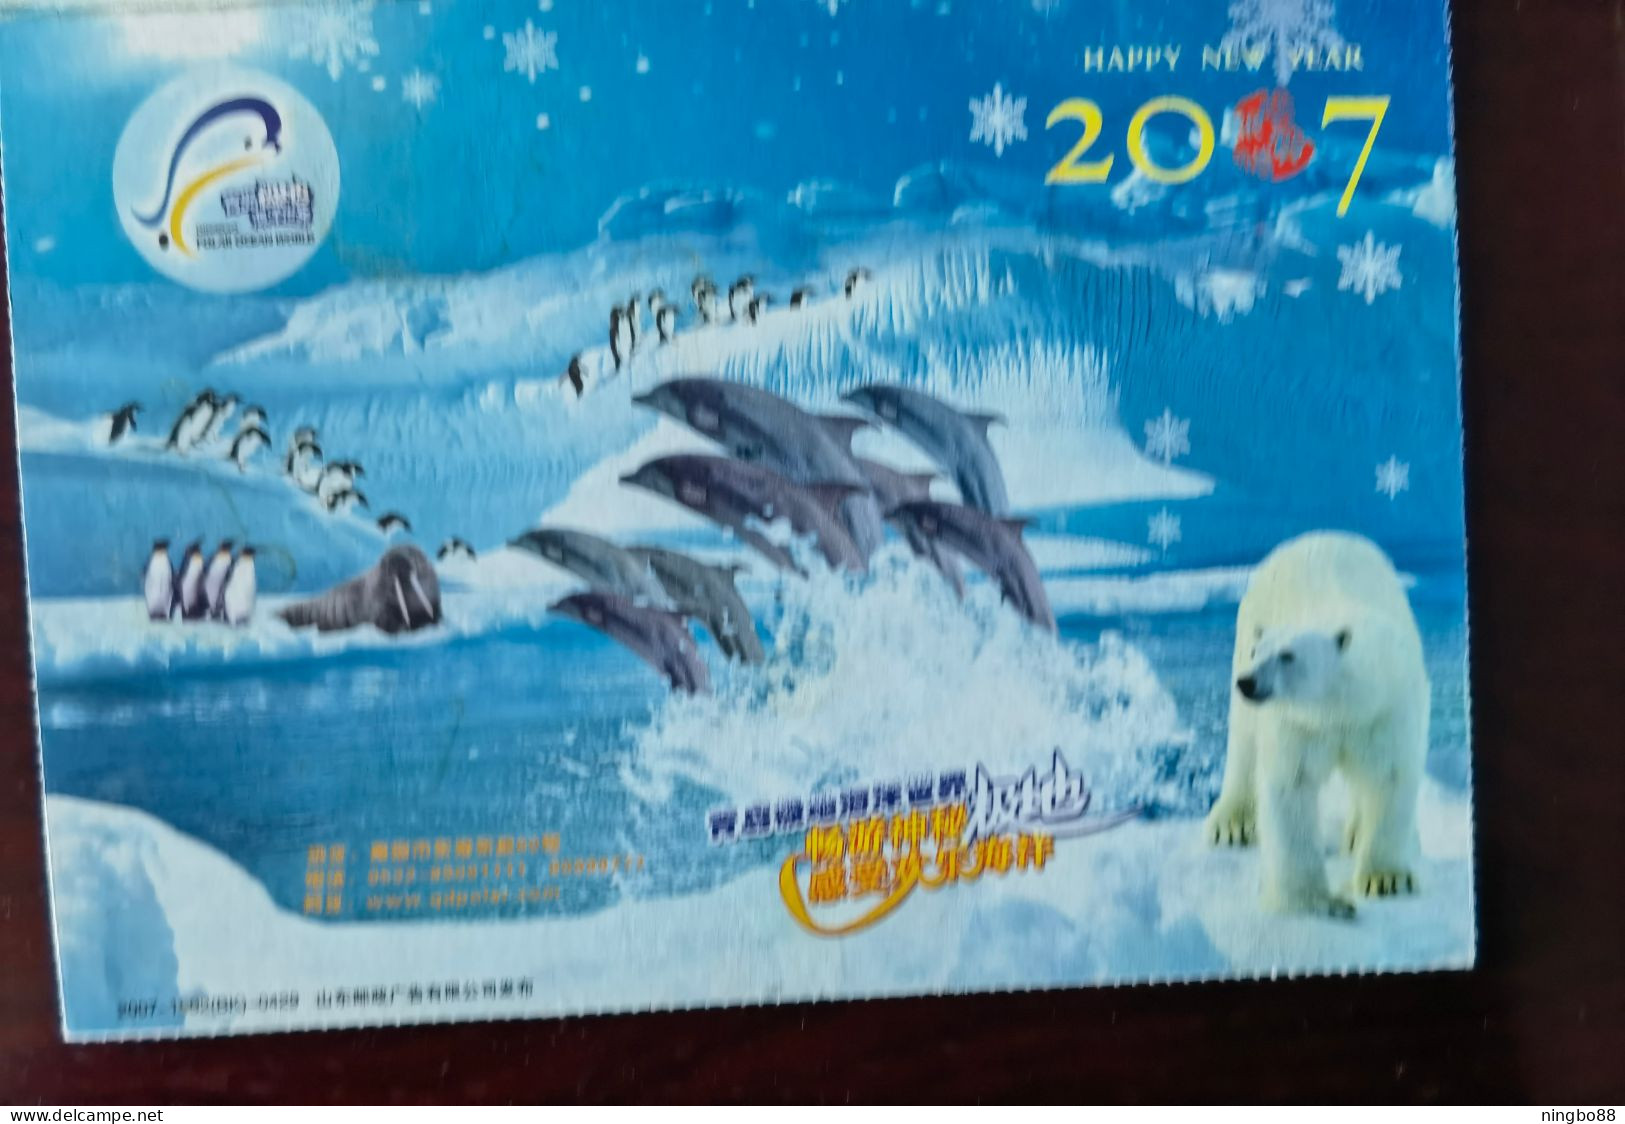 Polar Bear,Dolphin,Antarctic Penguin,Arctic Walrus,CN07 Qingdao Polar Aquarium New Year Pre-stamped Letter Card - Dauphins